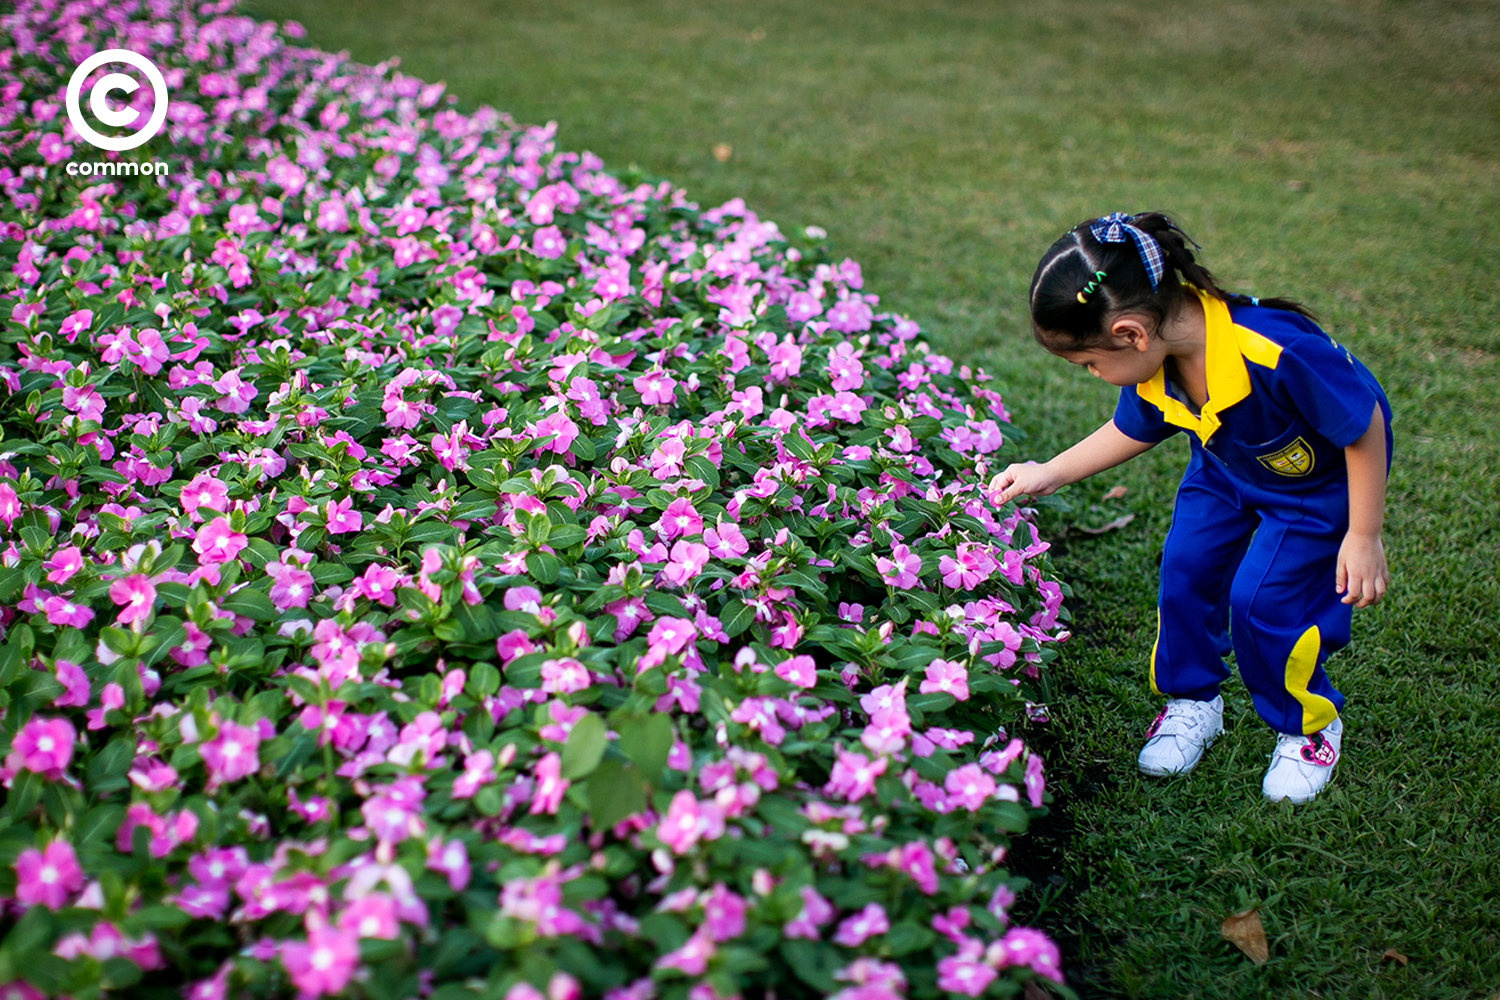 #photoessay #สวนหลวงร9 #ดอกไม้ #CULTURE #พรรณไม้งามอร่ามสวนหลวงร9 #common